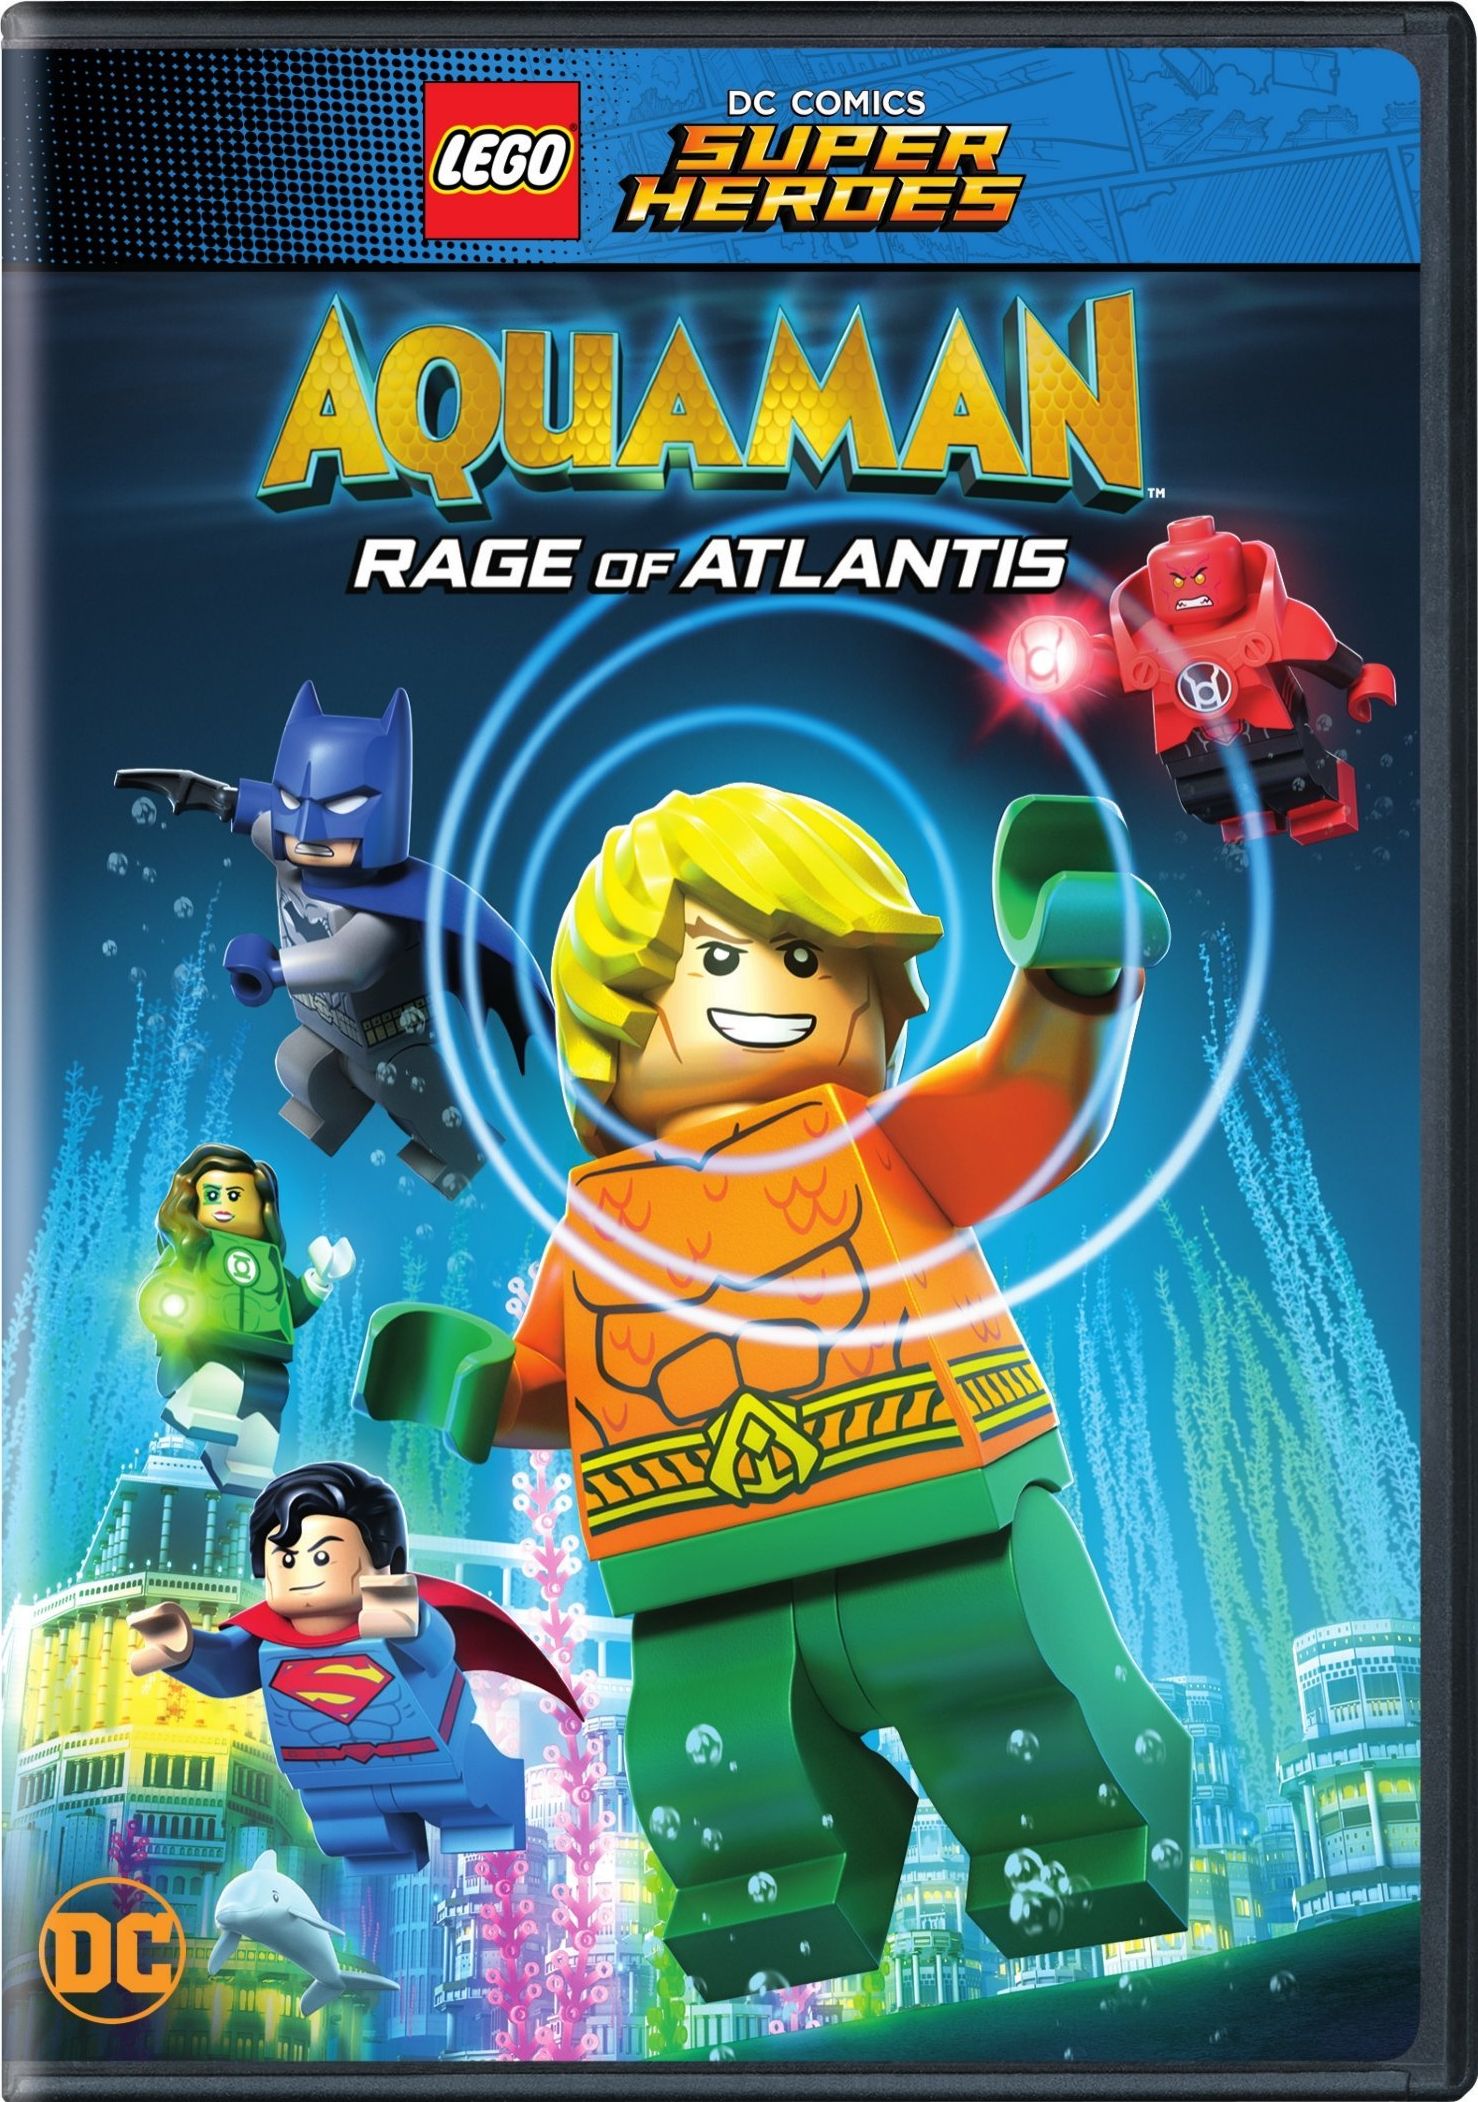 LEGO DC Comics Super Heroes: Aquaman - Rage of Atlantis DVD Release Date August 28, 20181478 x 2102